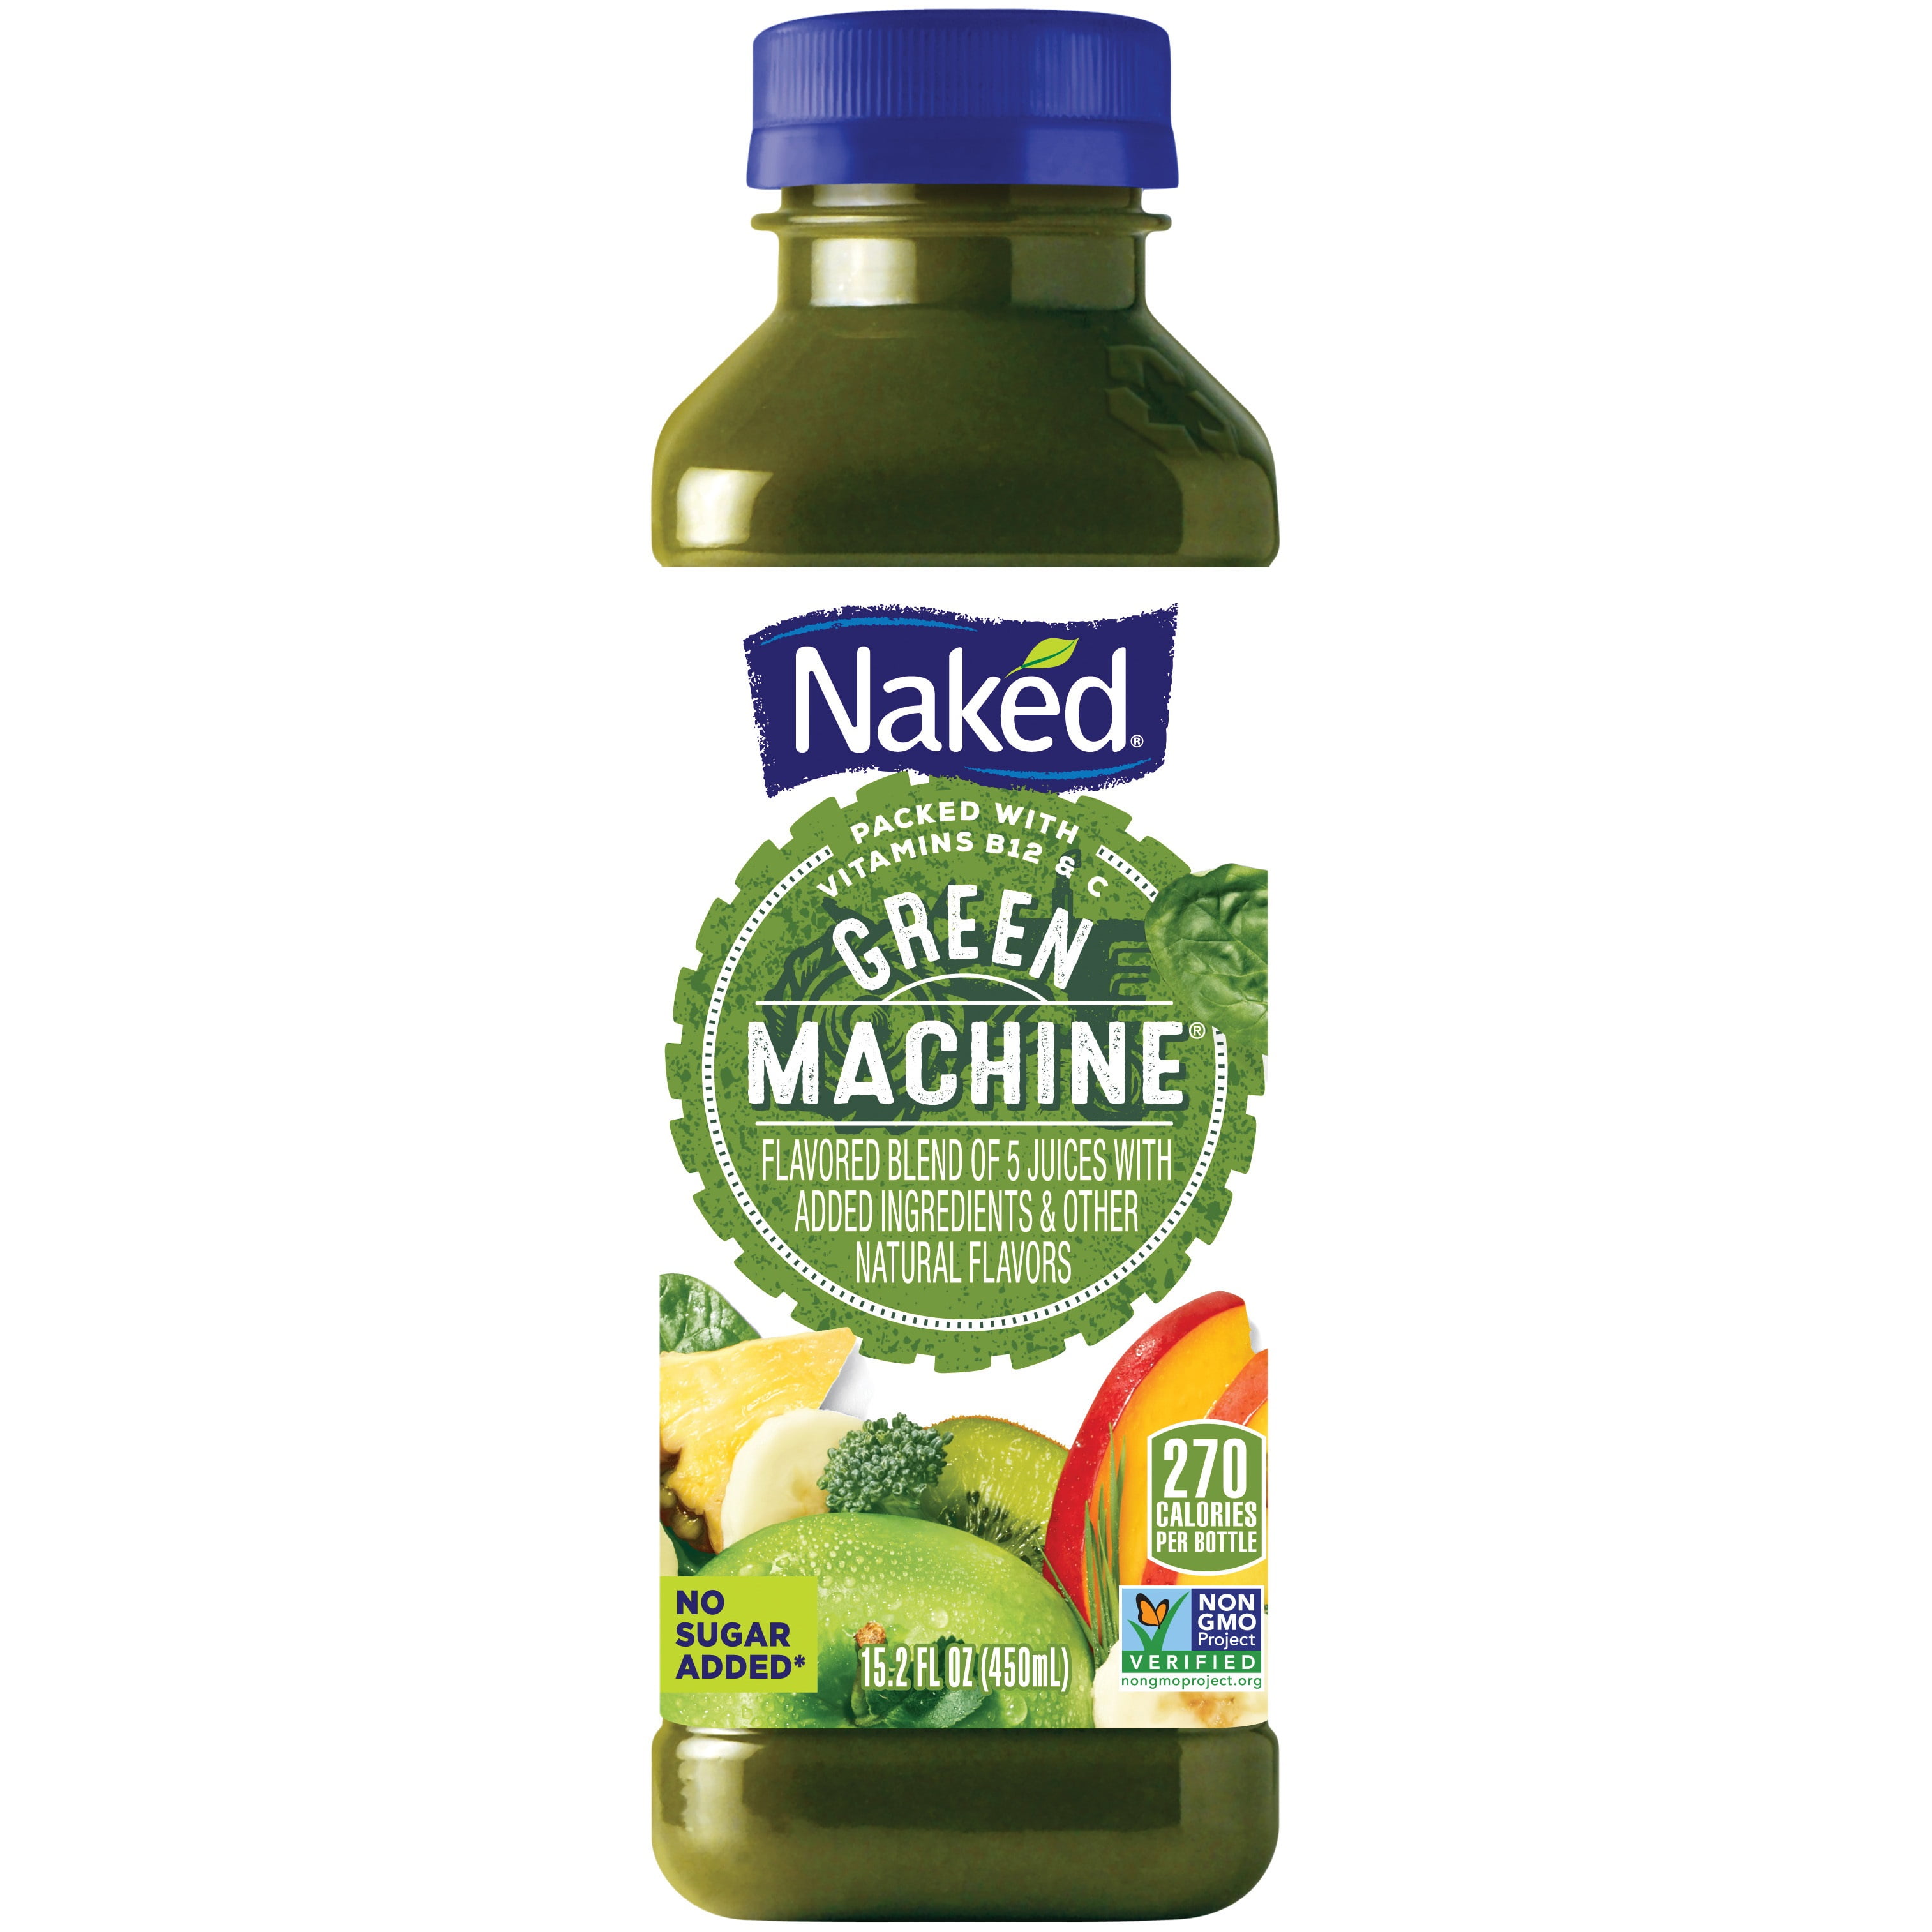 Naked Juice Mi Telegraph